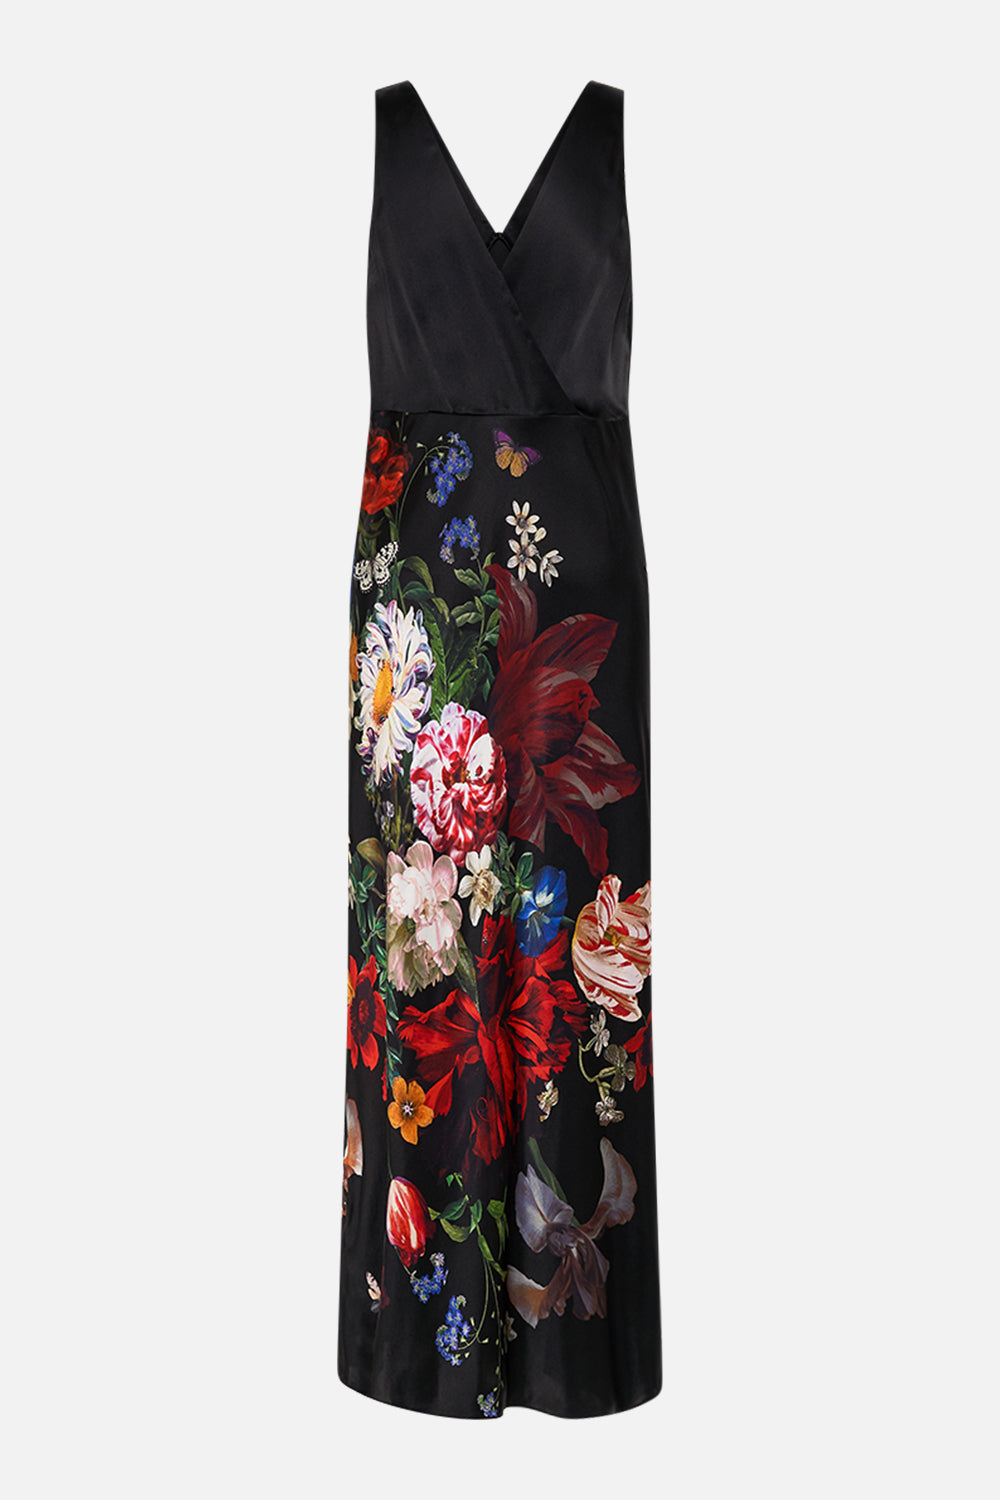 CAMILLA black silk slip dress in A Still Life print